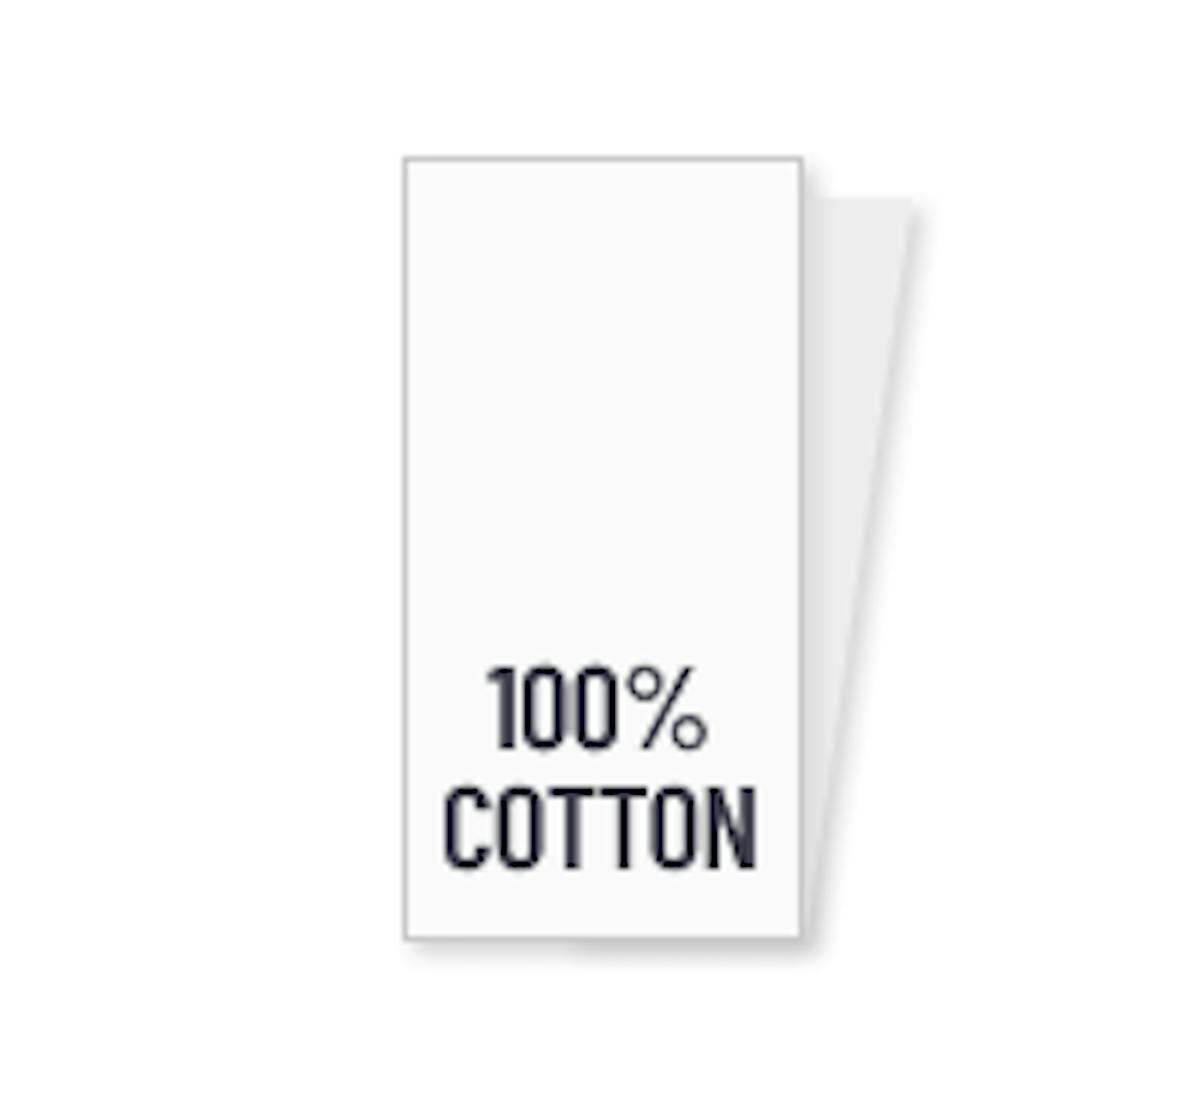  100% Cotton clothing label